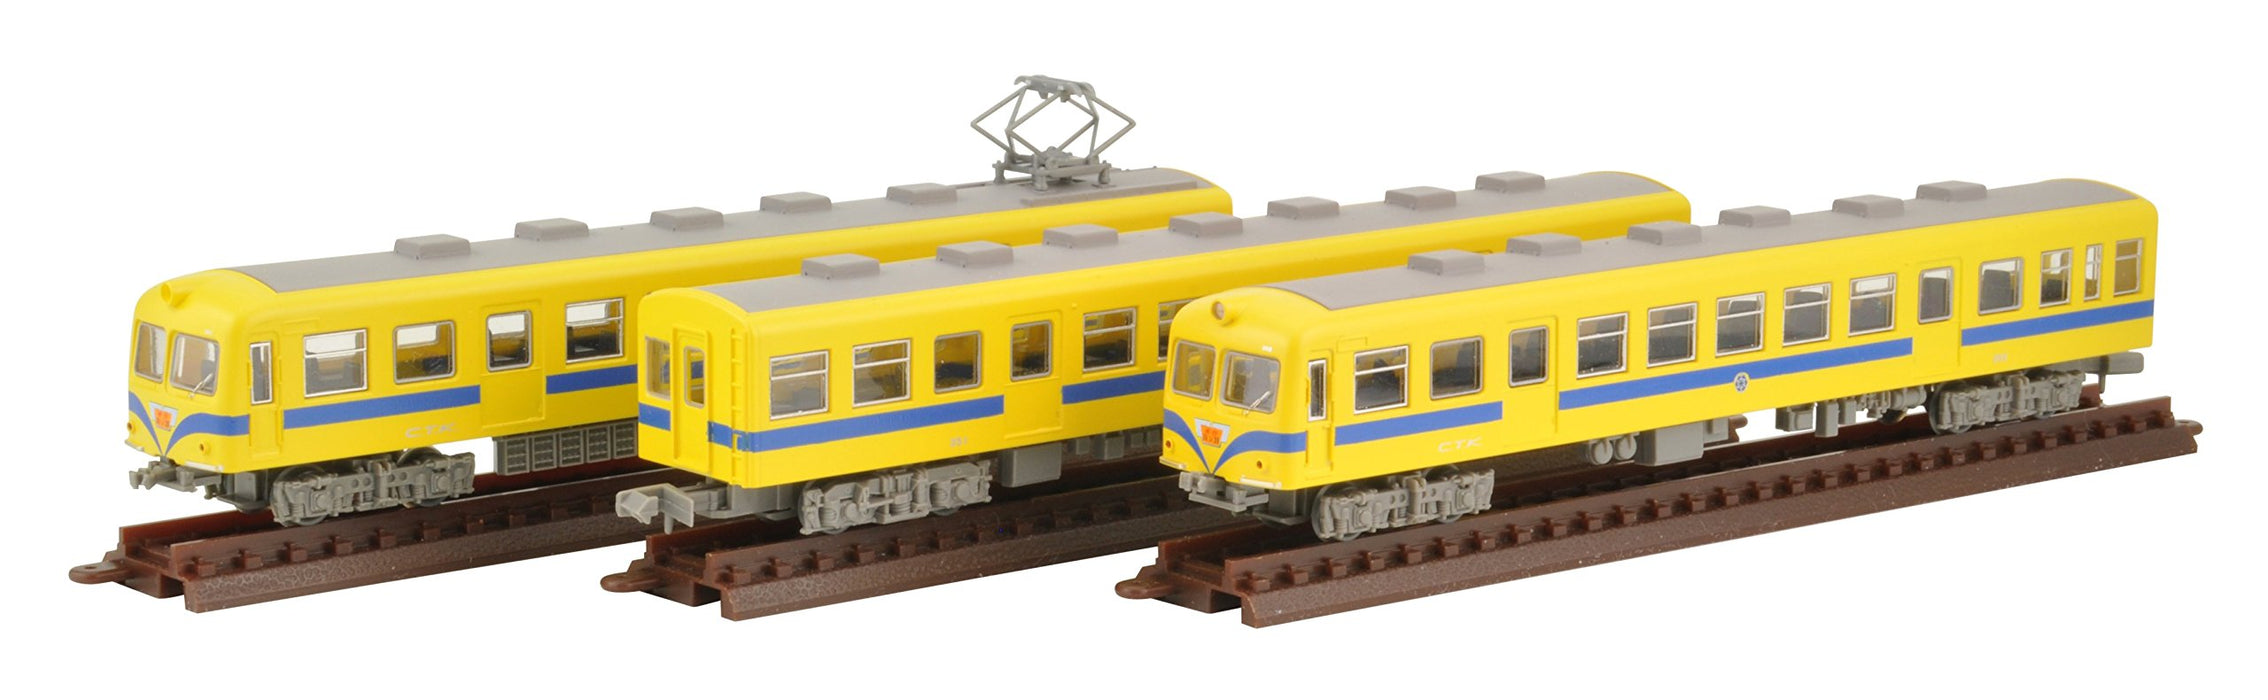 Tomytec Chichibu Railway 300 Series 3-Car Set New Paint Limited Edition Diorama